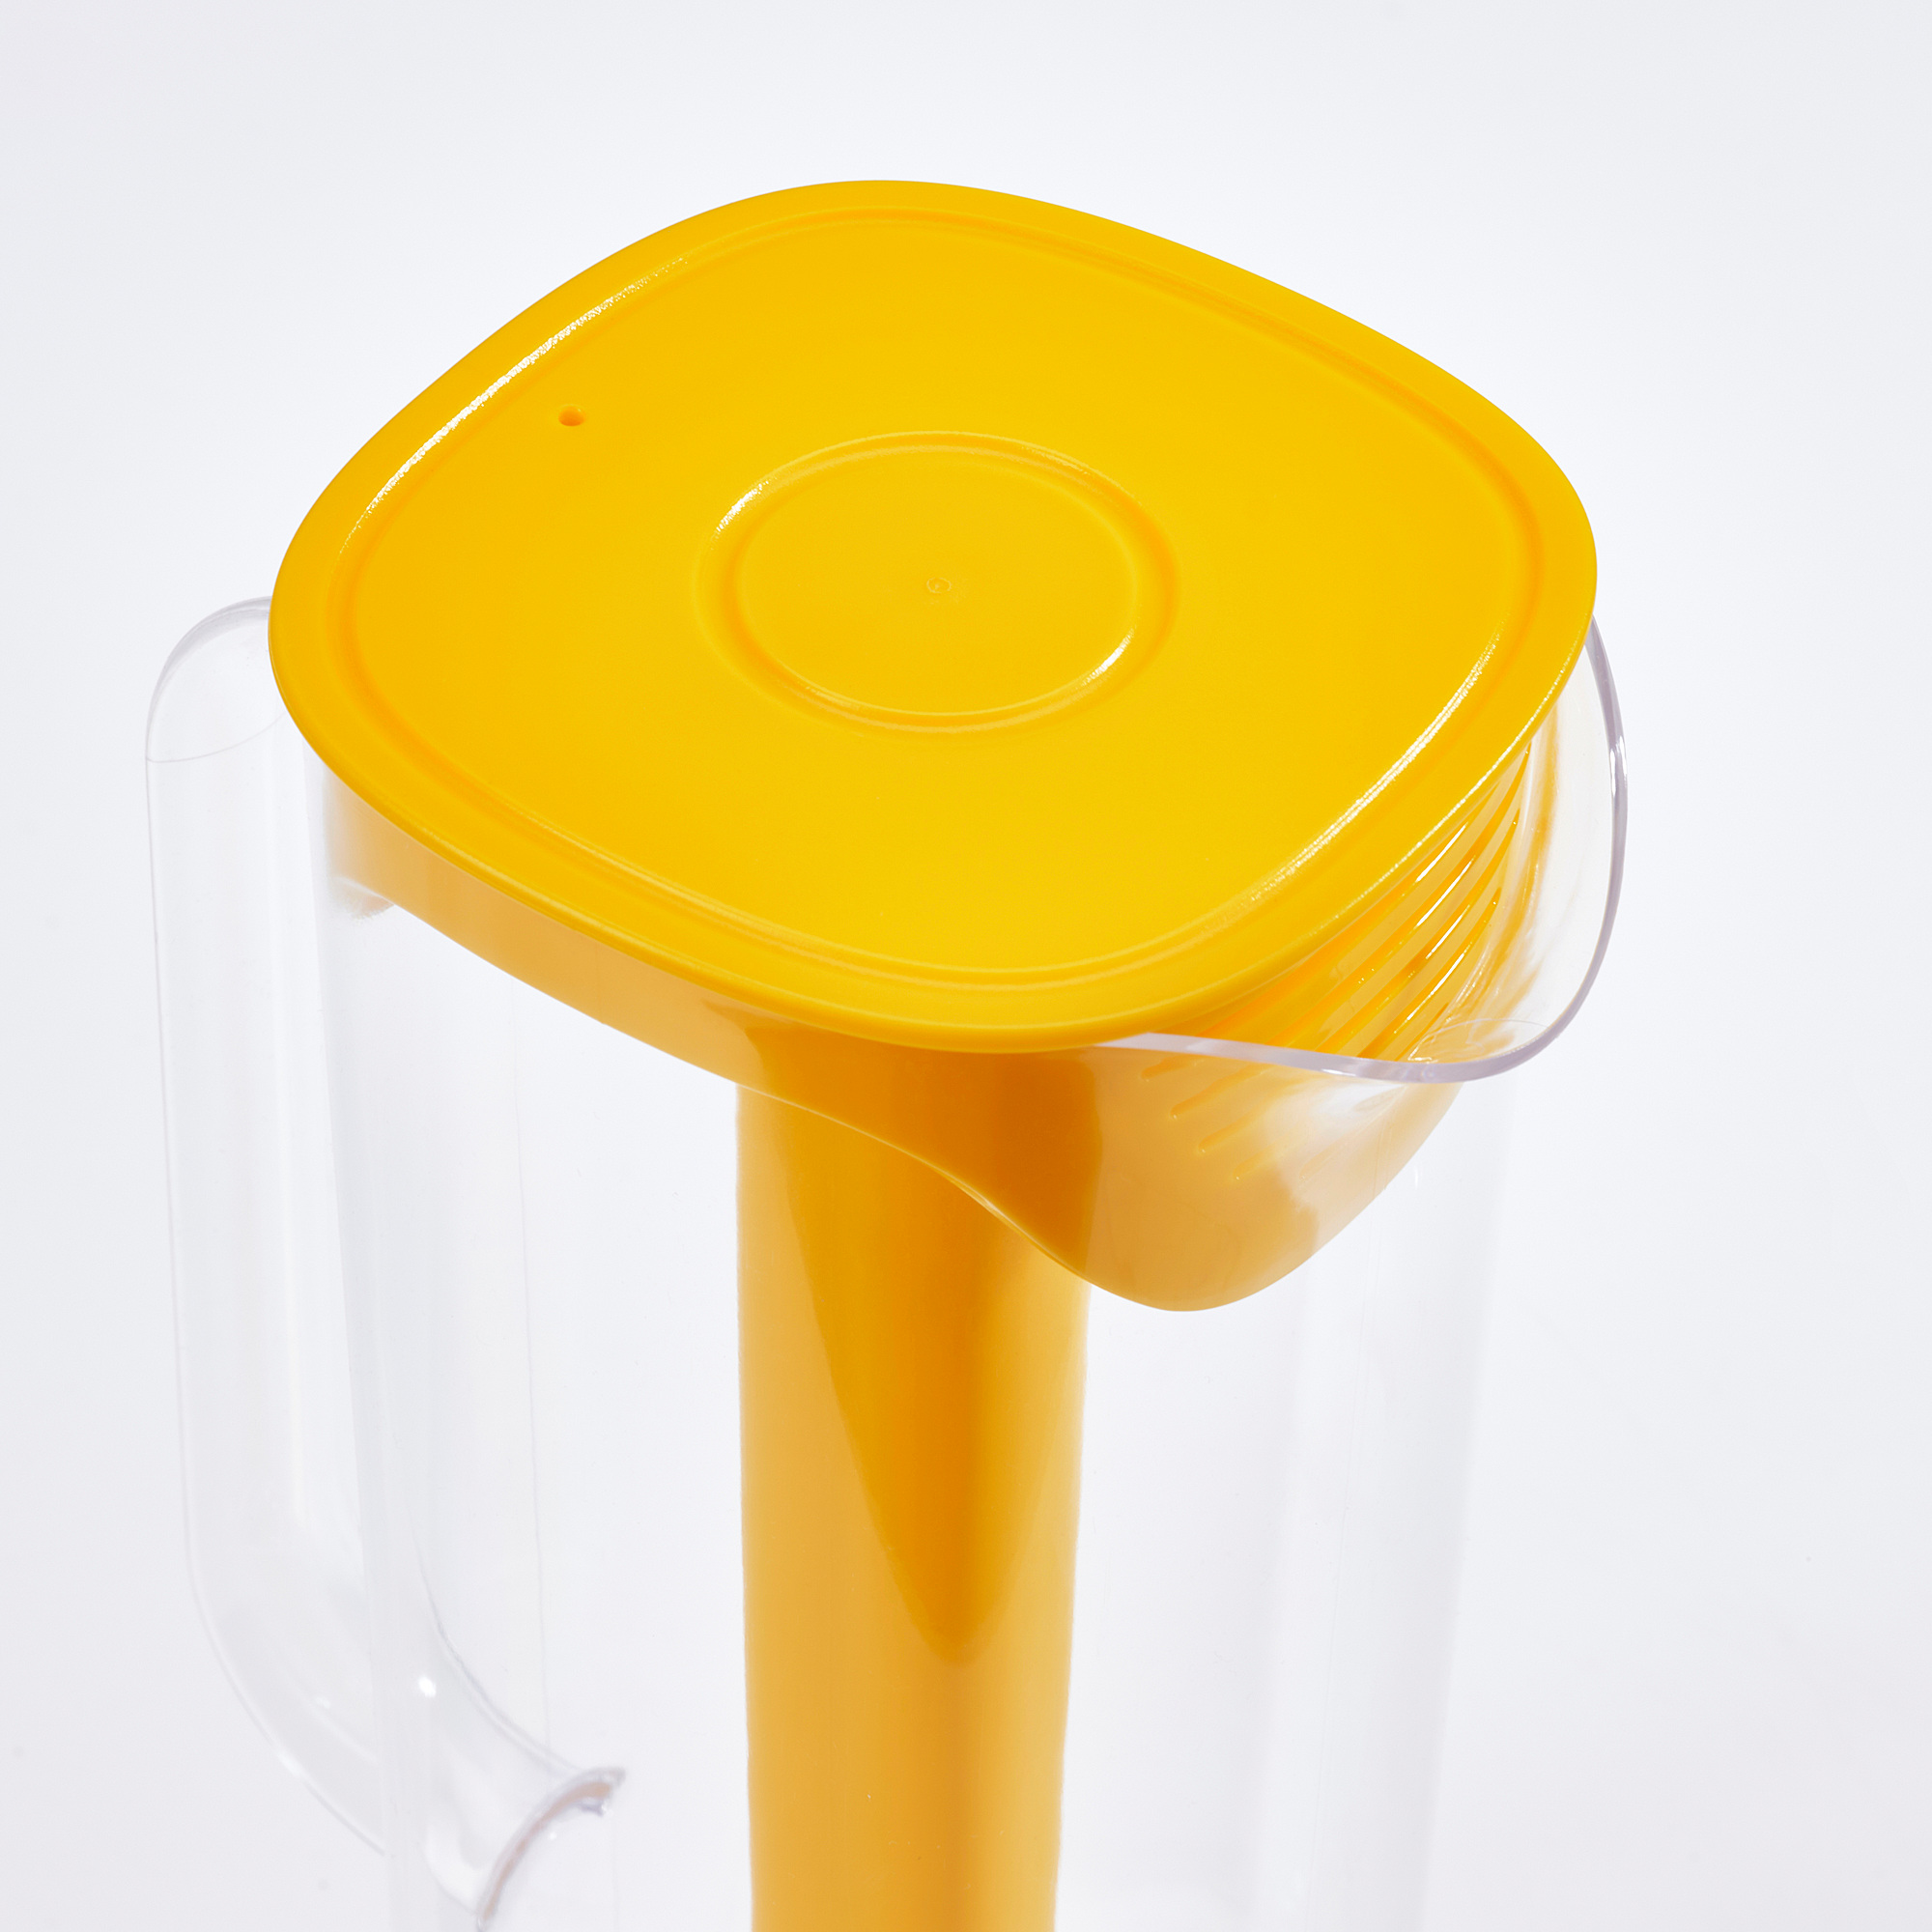 MOPPA jug with lid